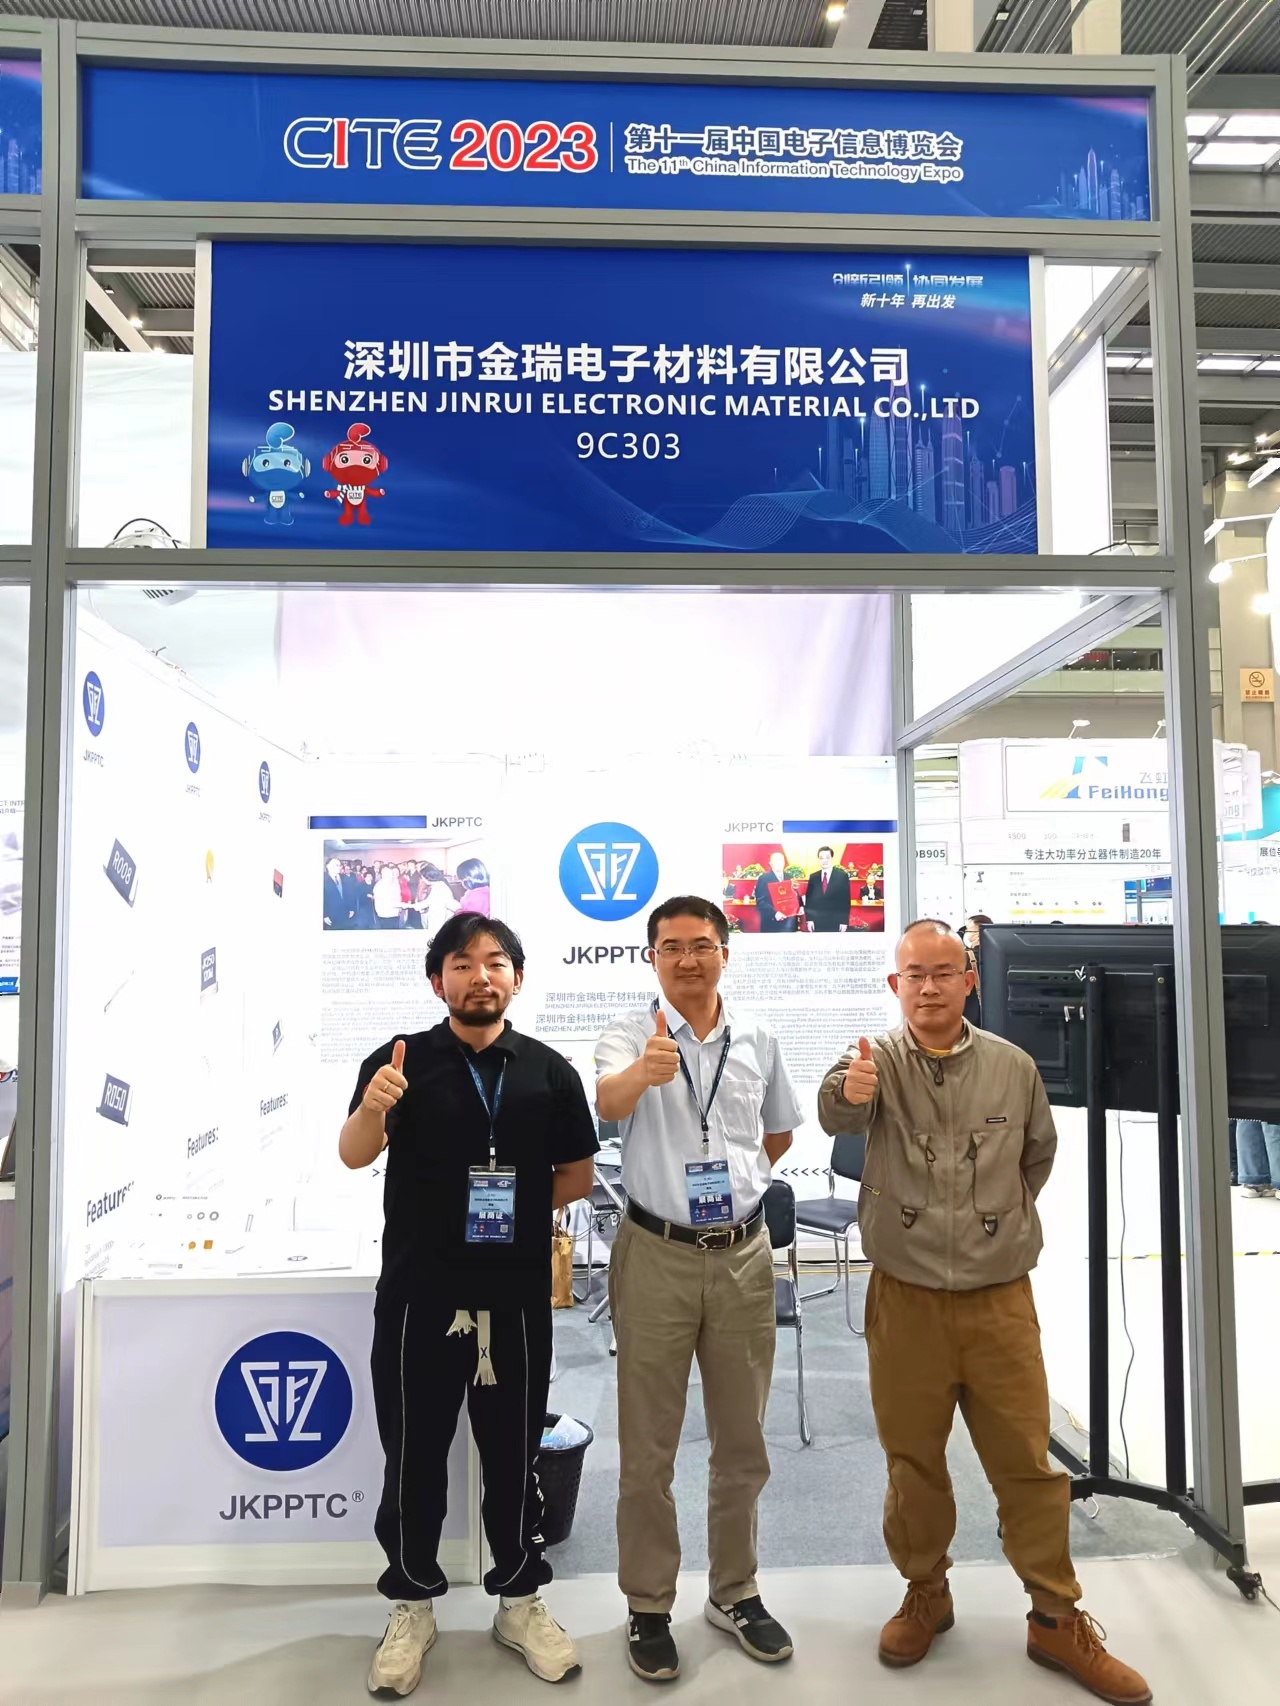 ADIOS!The 11th China Information Technology Expo!